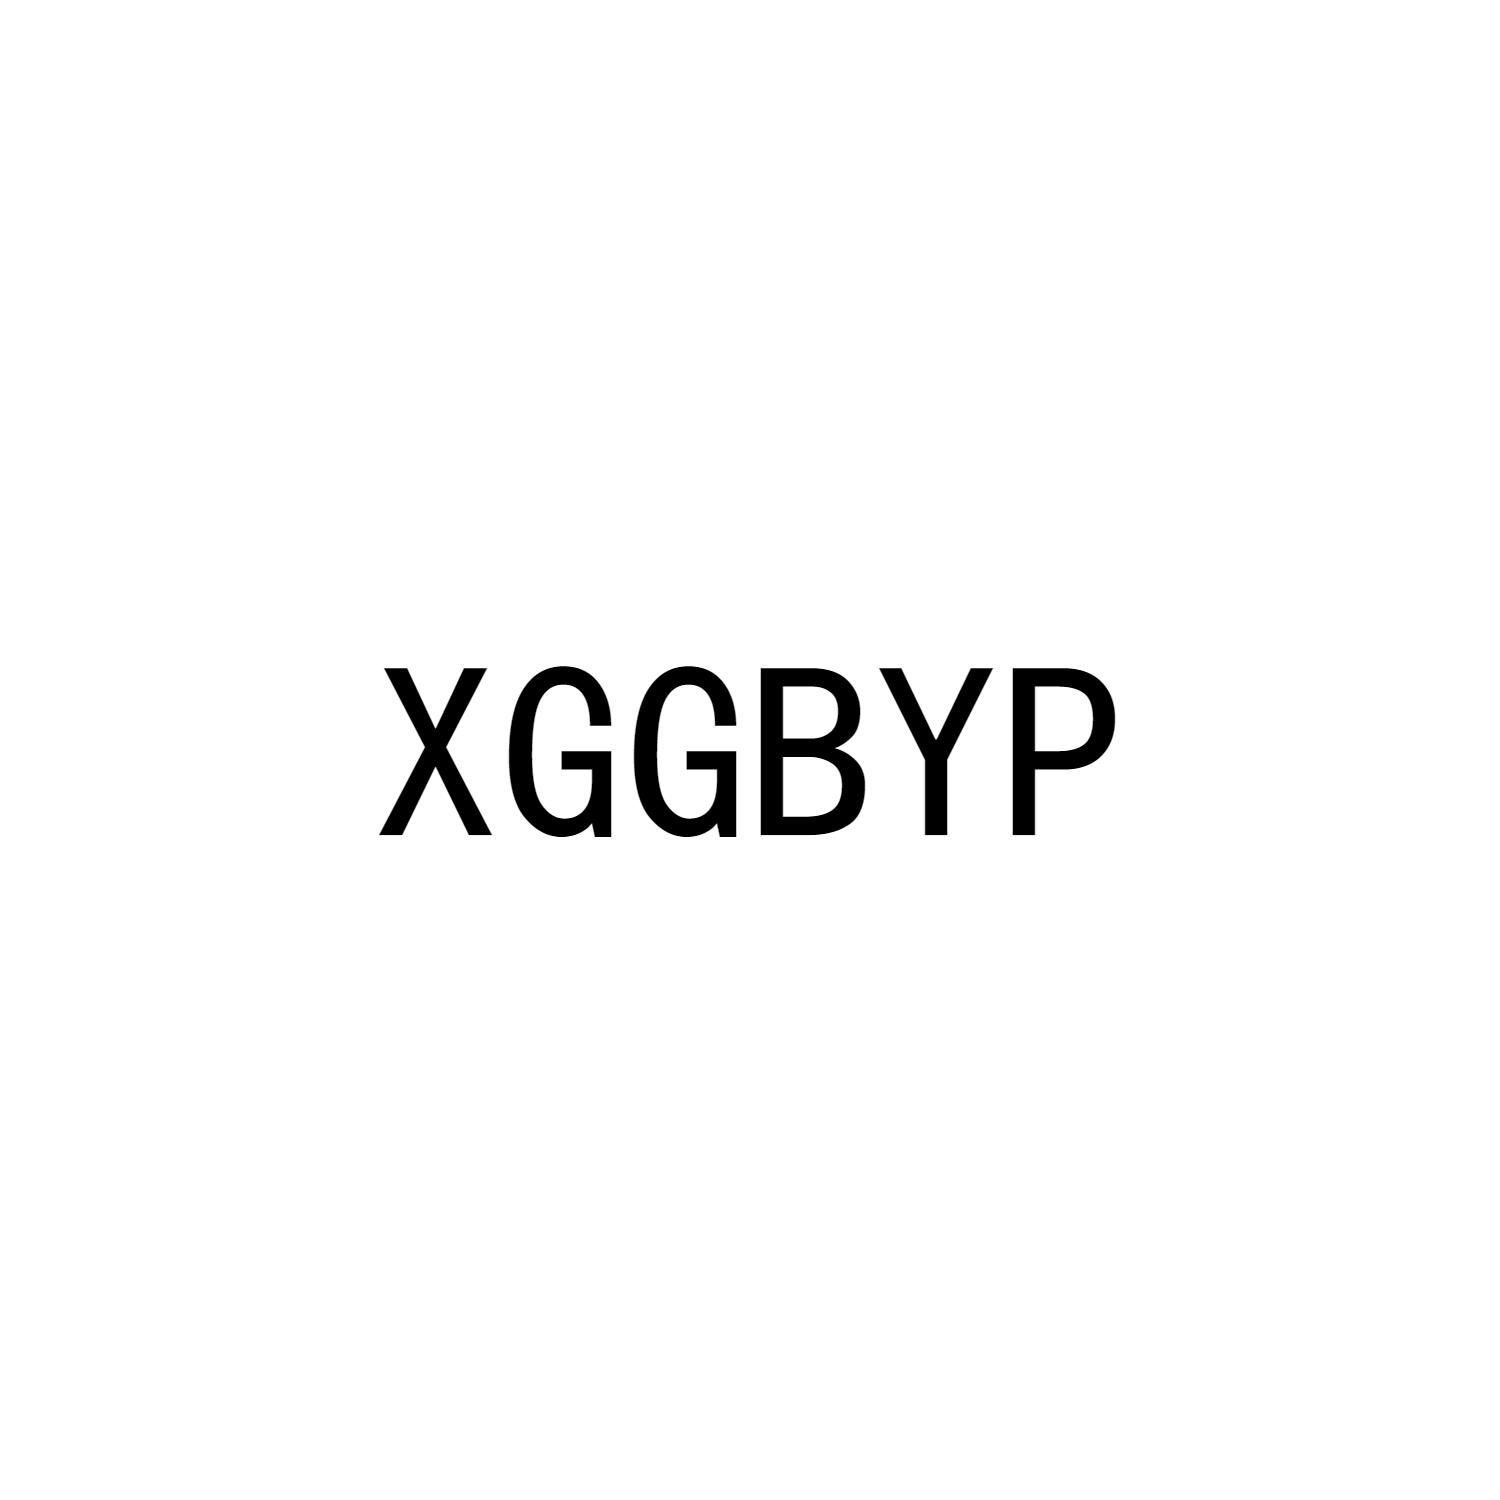 XGGBYP